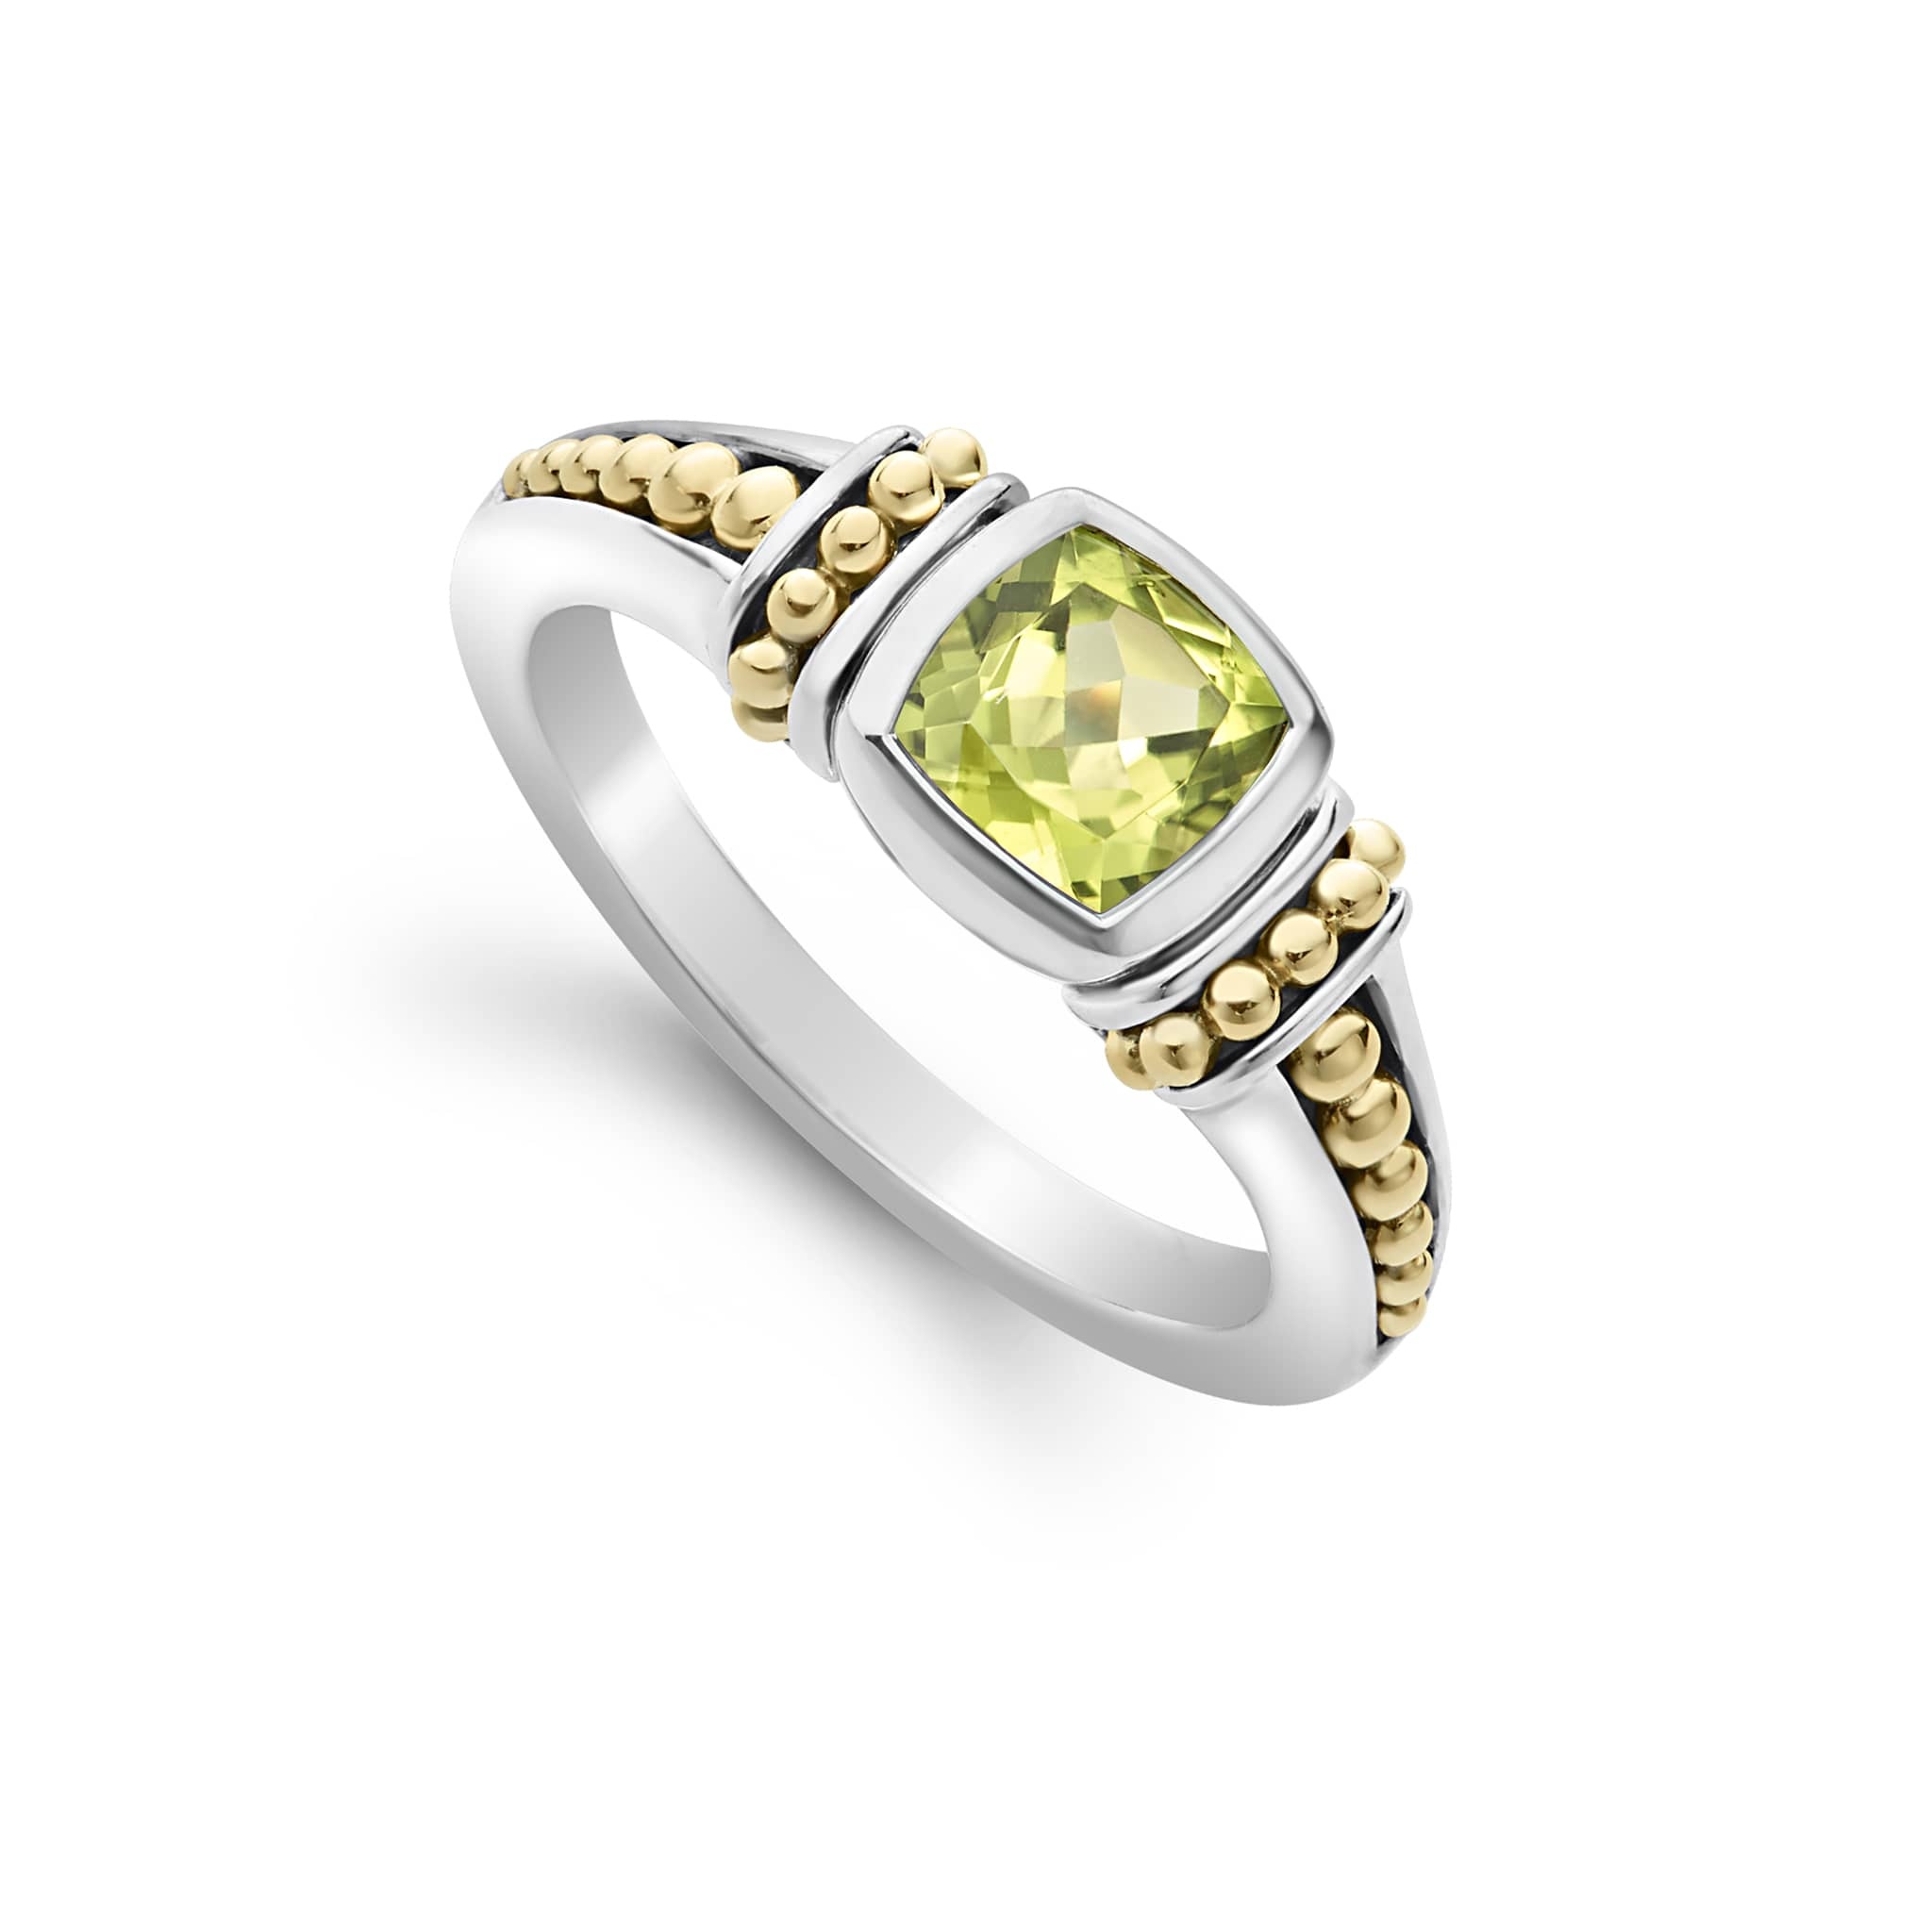 Peridot, Caviar color ring, Exquisite craftsmanship, Stunning jewelry, 2050x2050 HD Handy